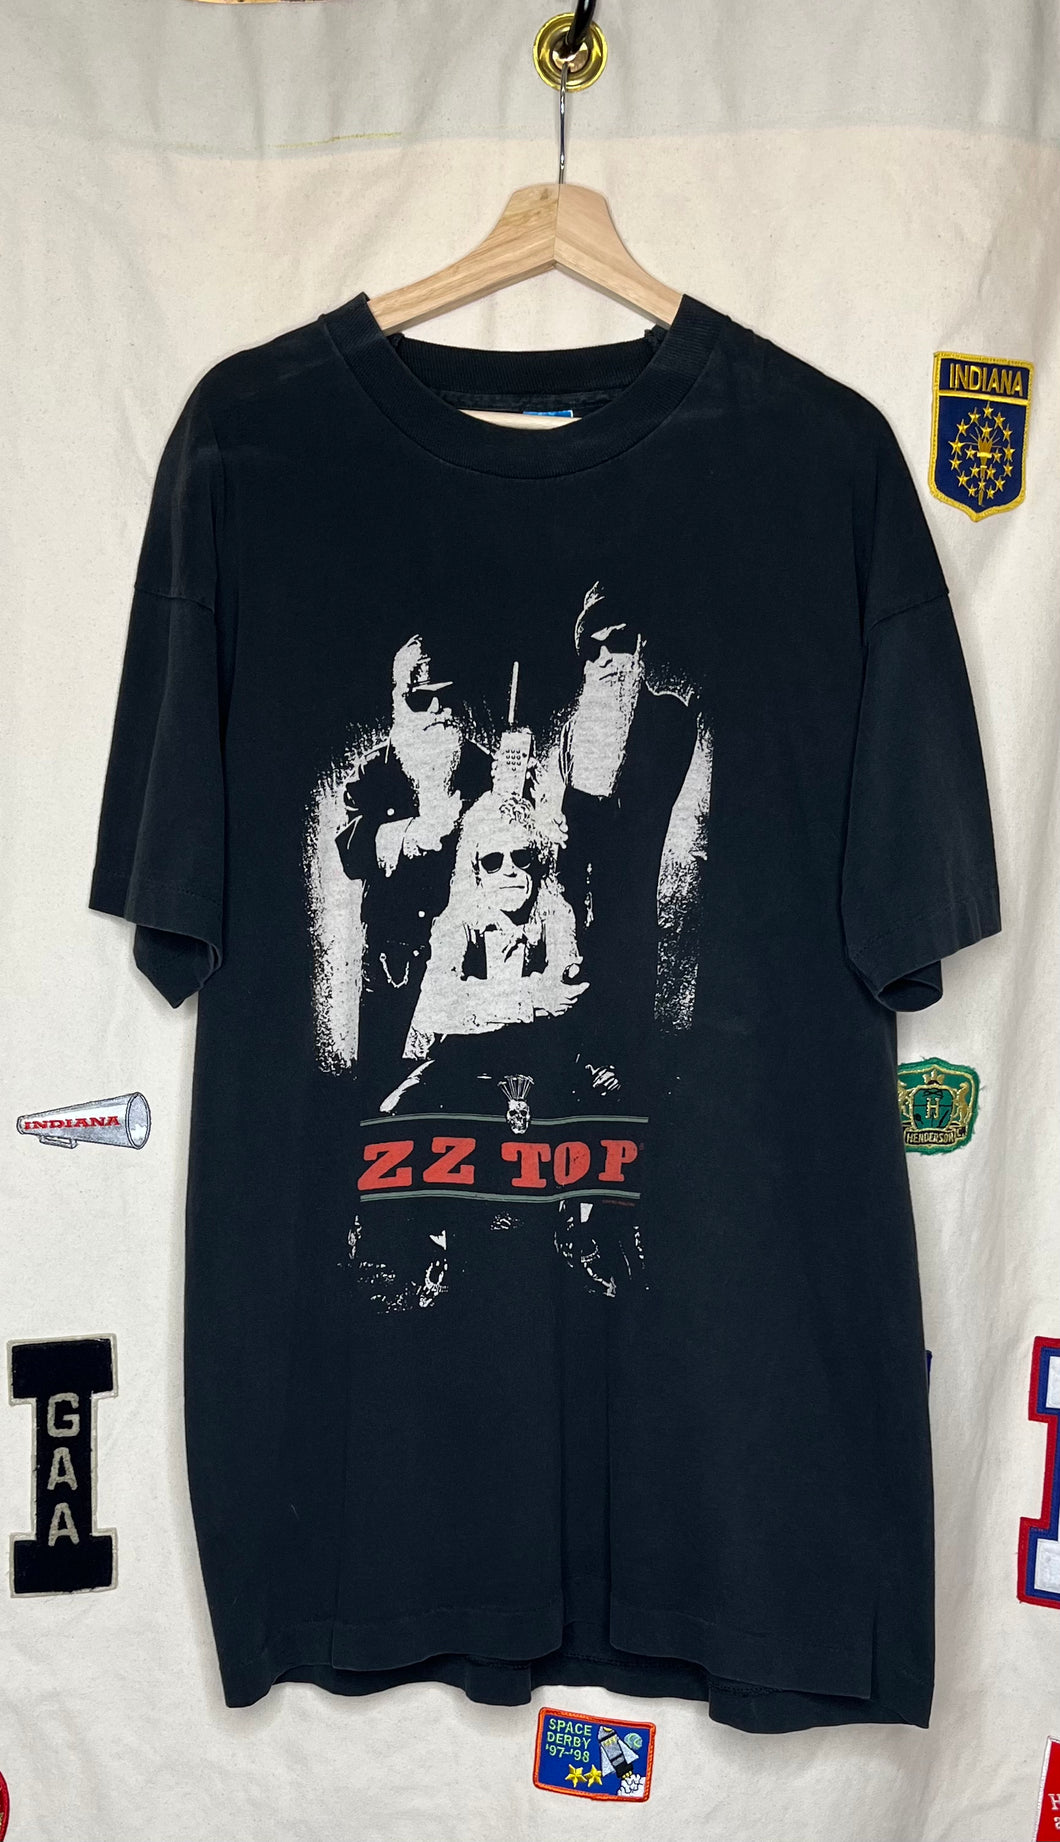 ZZ Top Insist on the Originals Black T-Shirt: XL